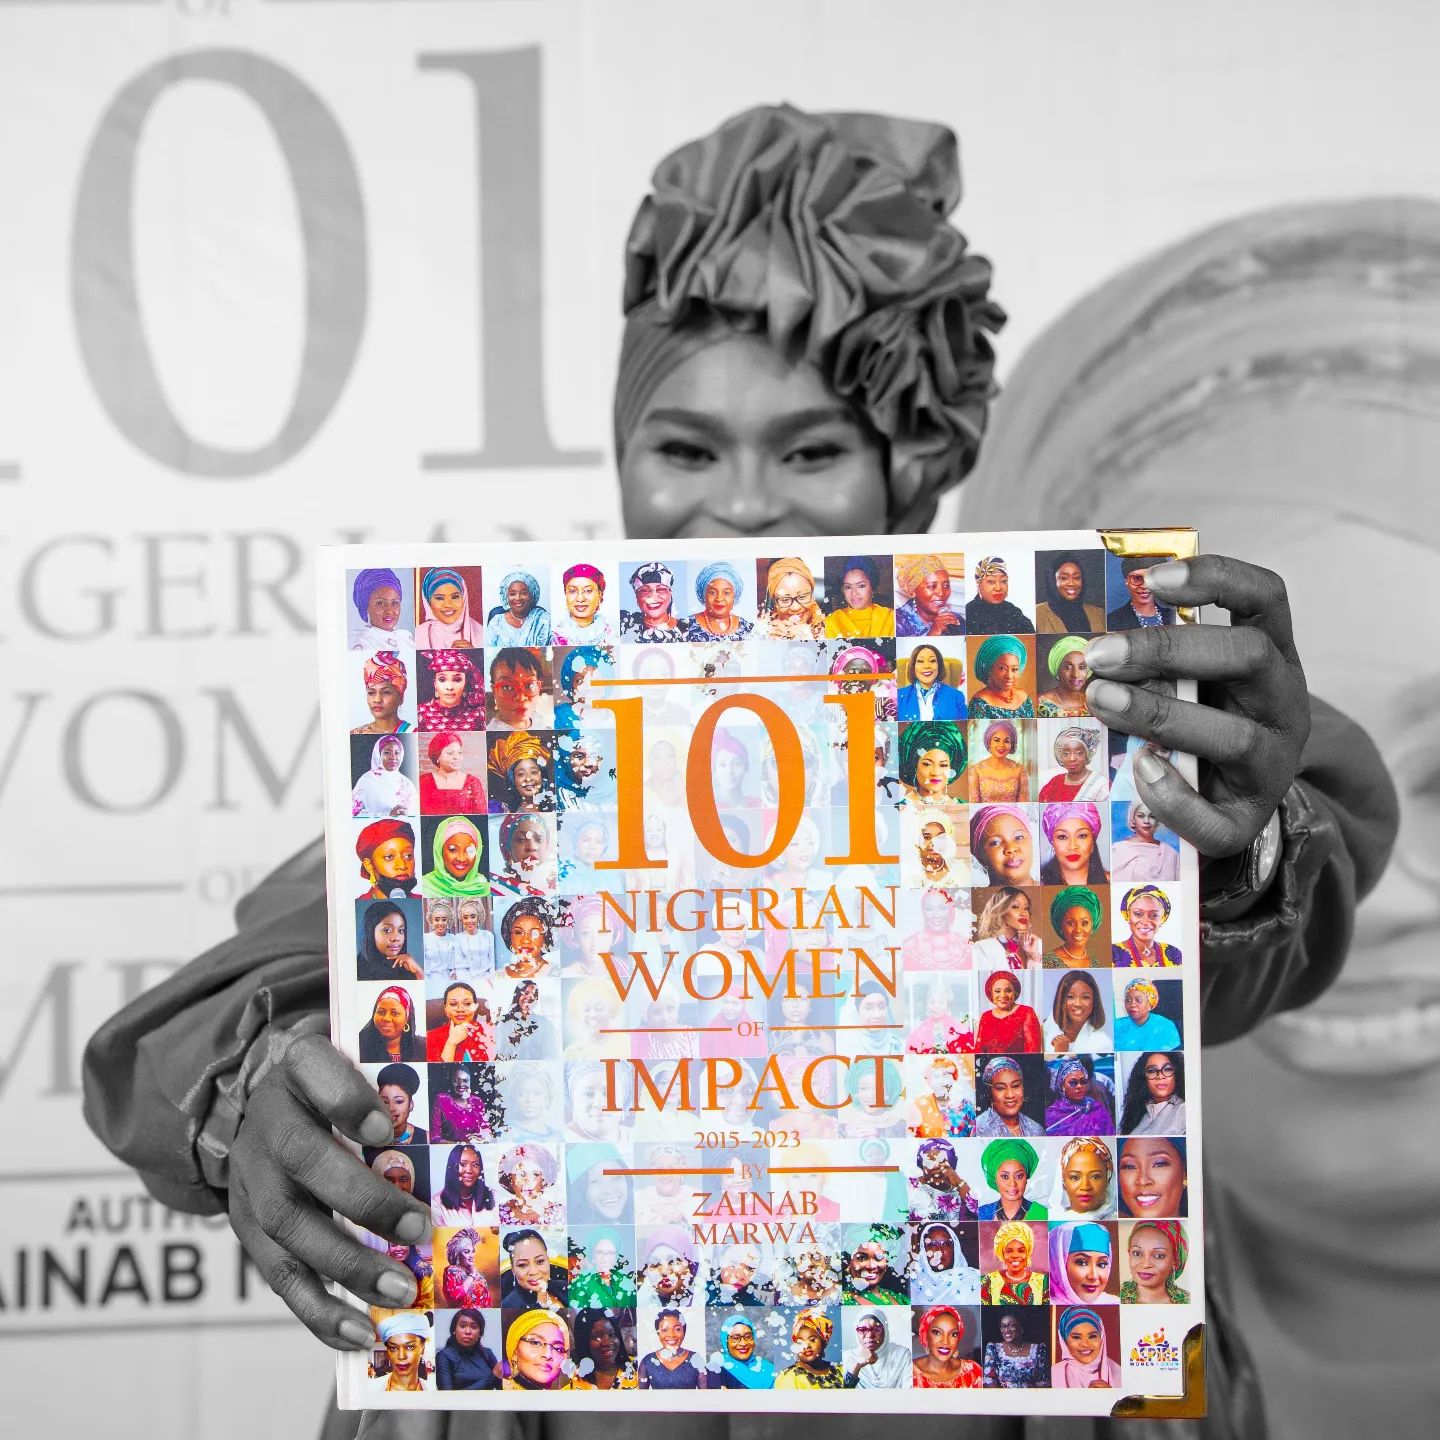 Public Presentation of 101 Nigerian Women of Impact